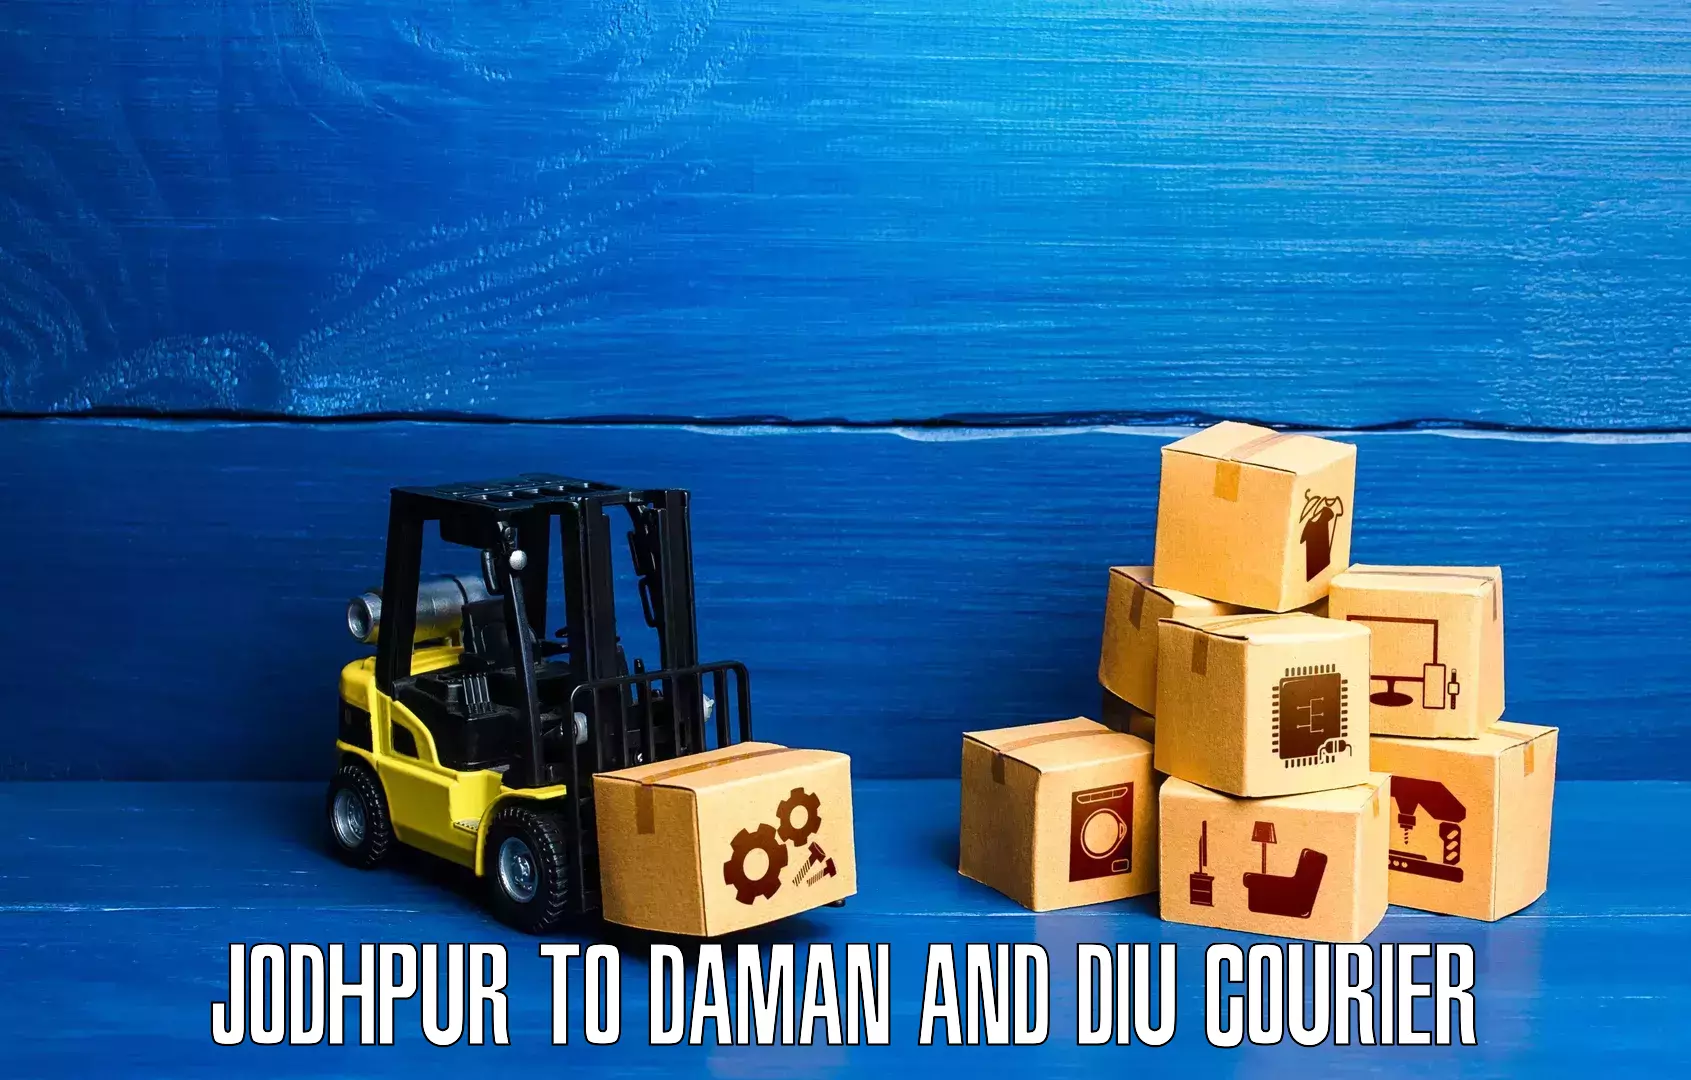 Courier service innovation Jodhpur to Diu